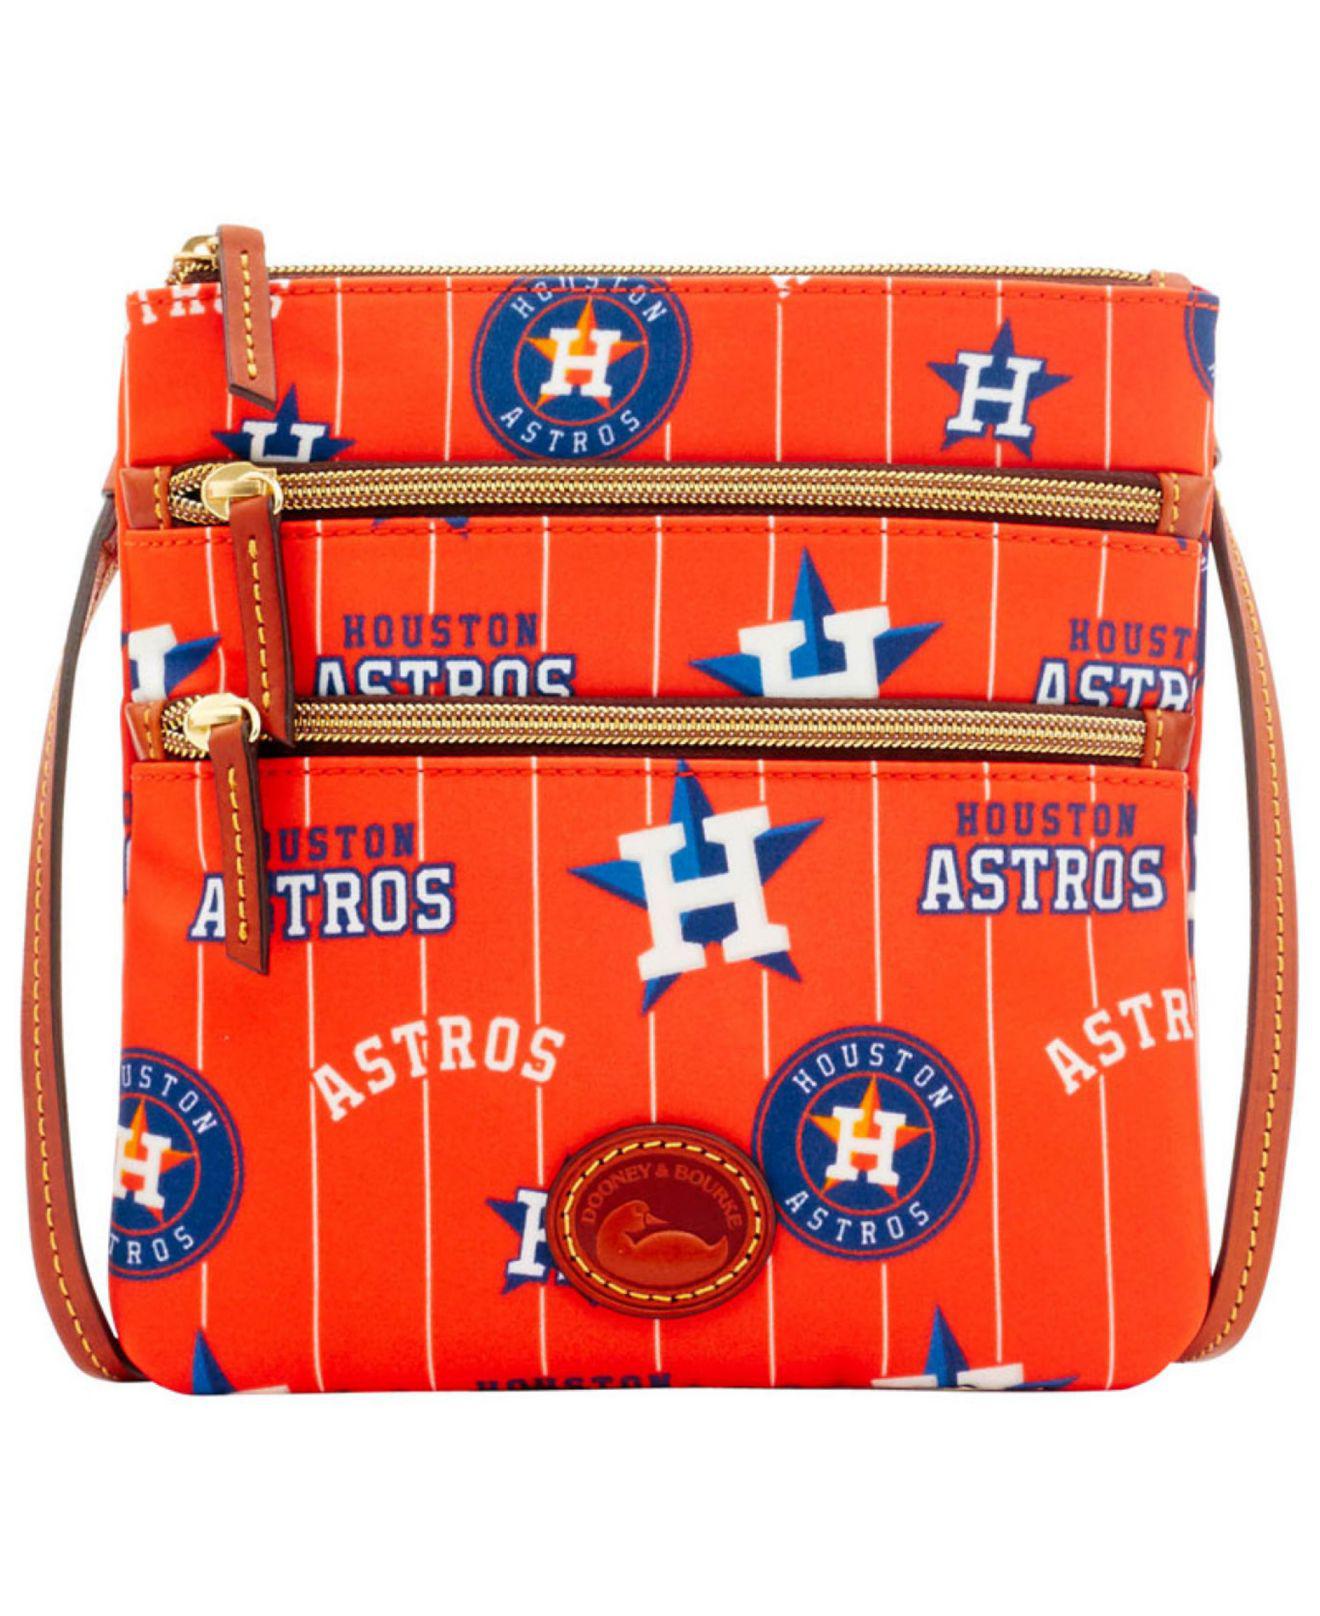 Dooney & Bourke Women's Houston Astros Sporty Monogram Large Purse